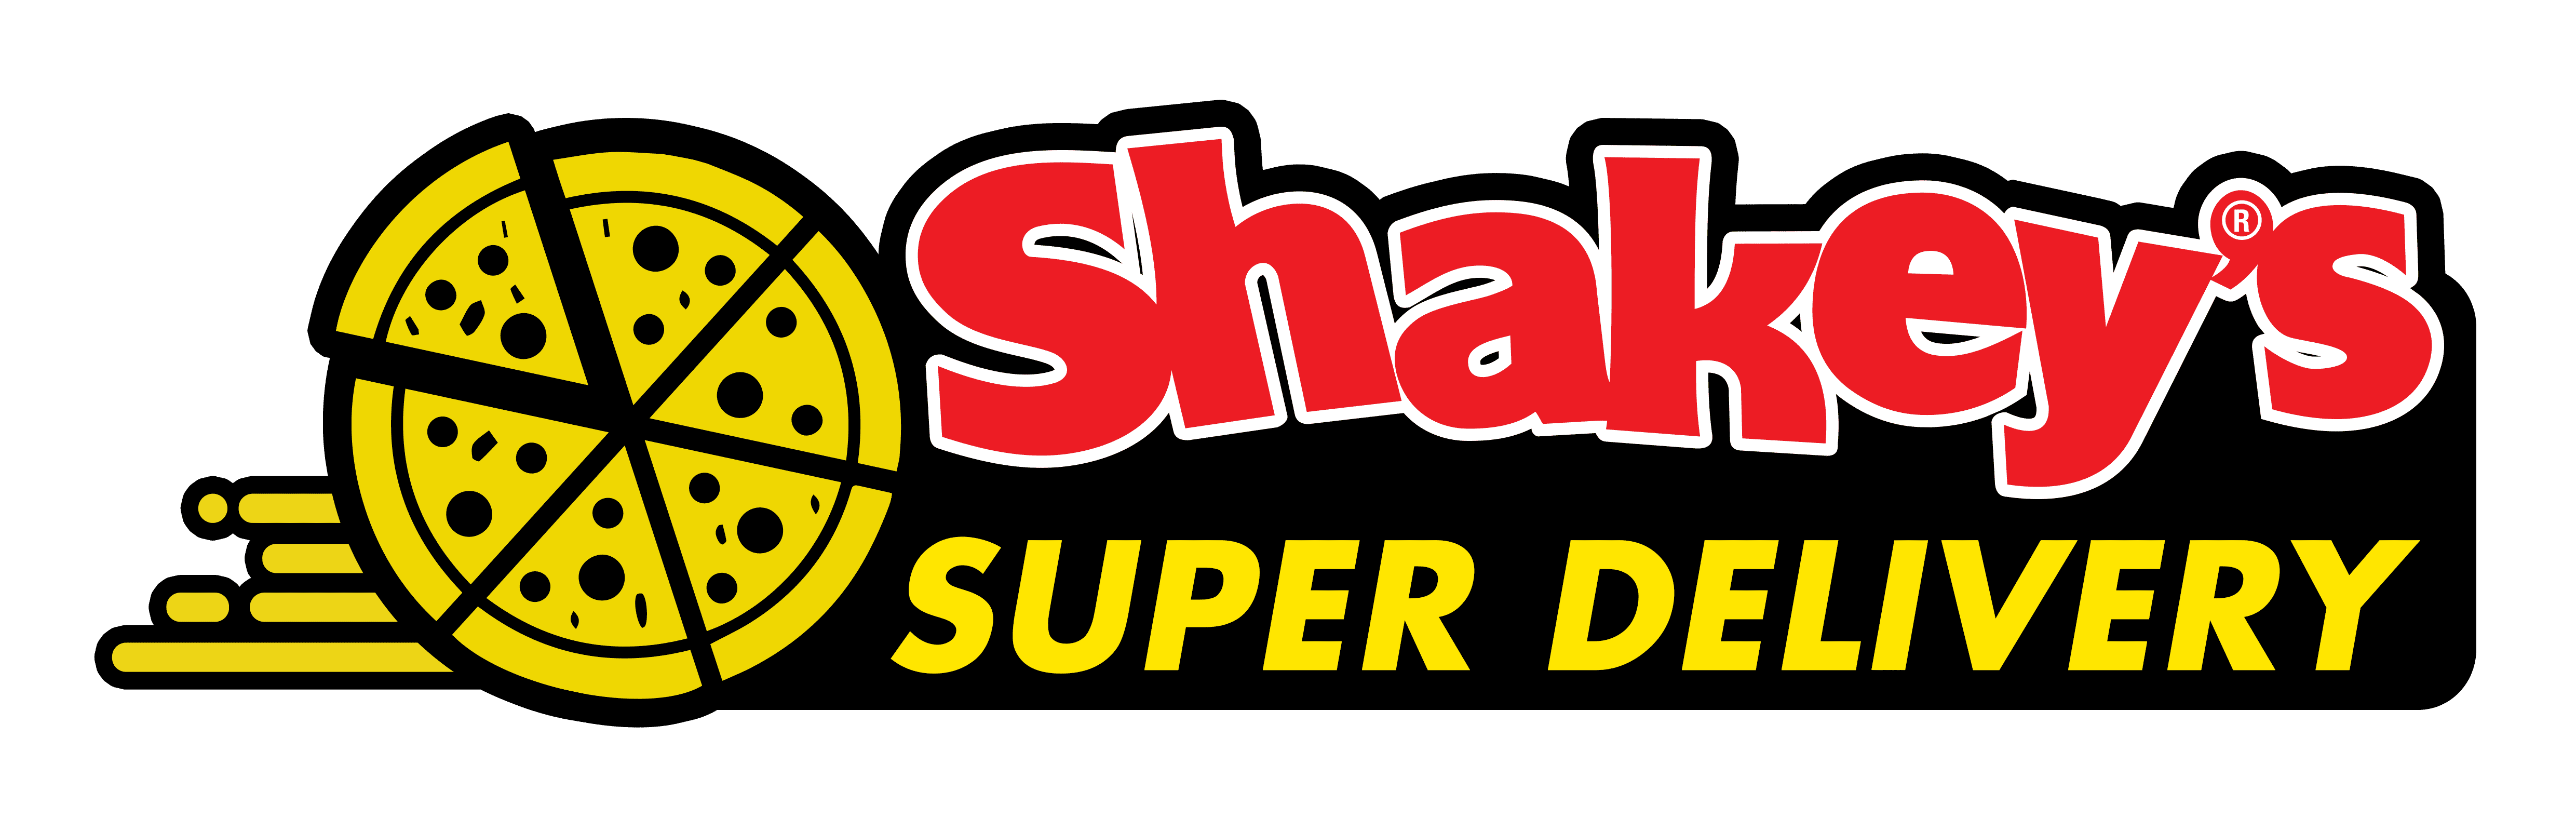 Shakey's Pizza Philippines